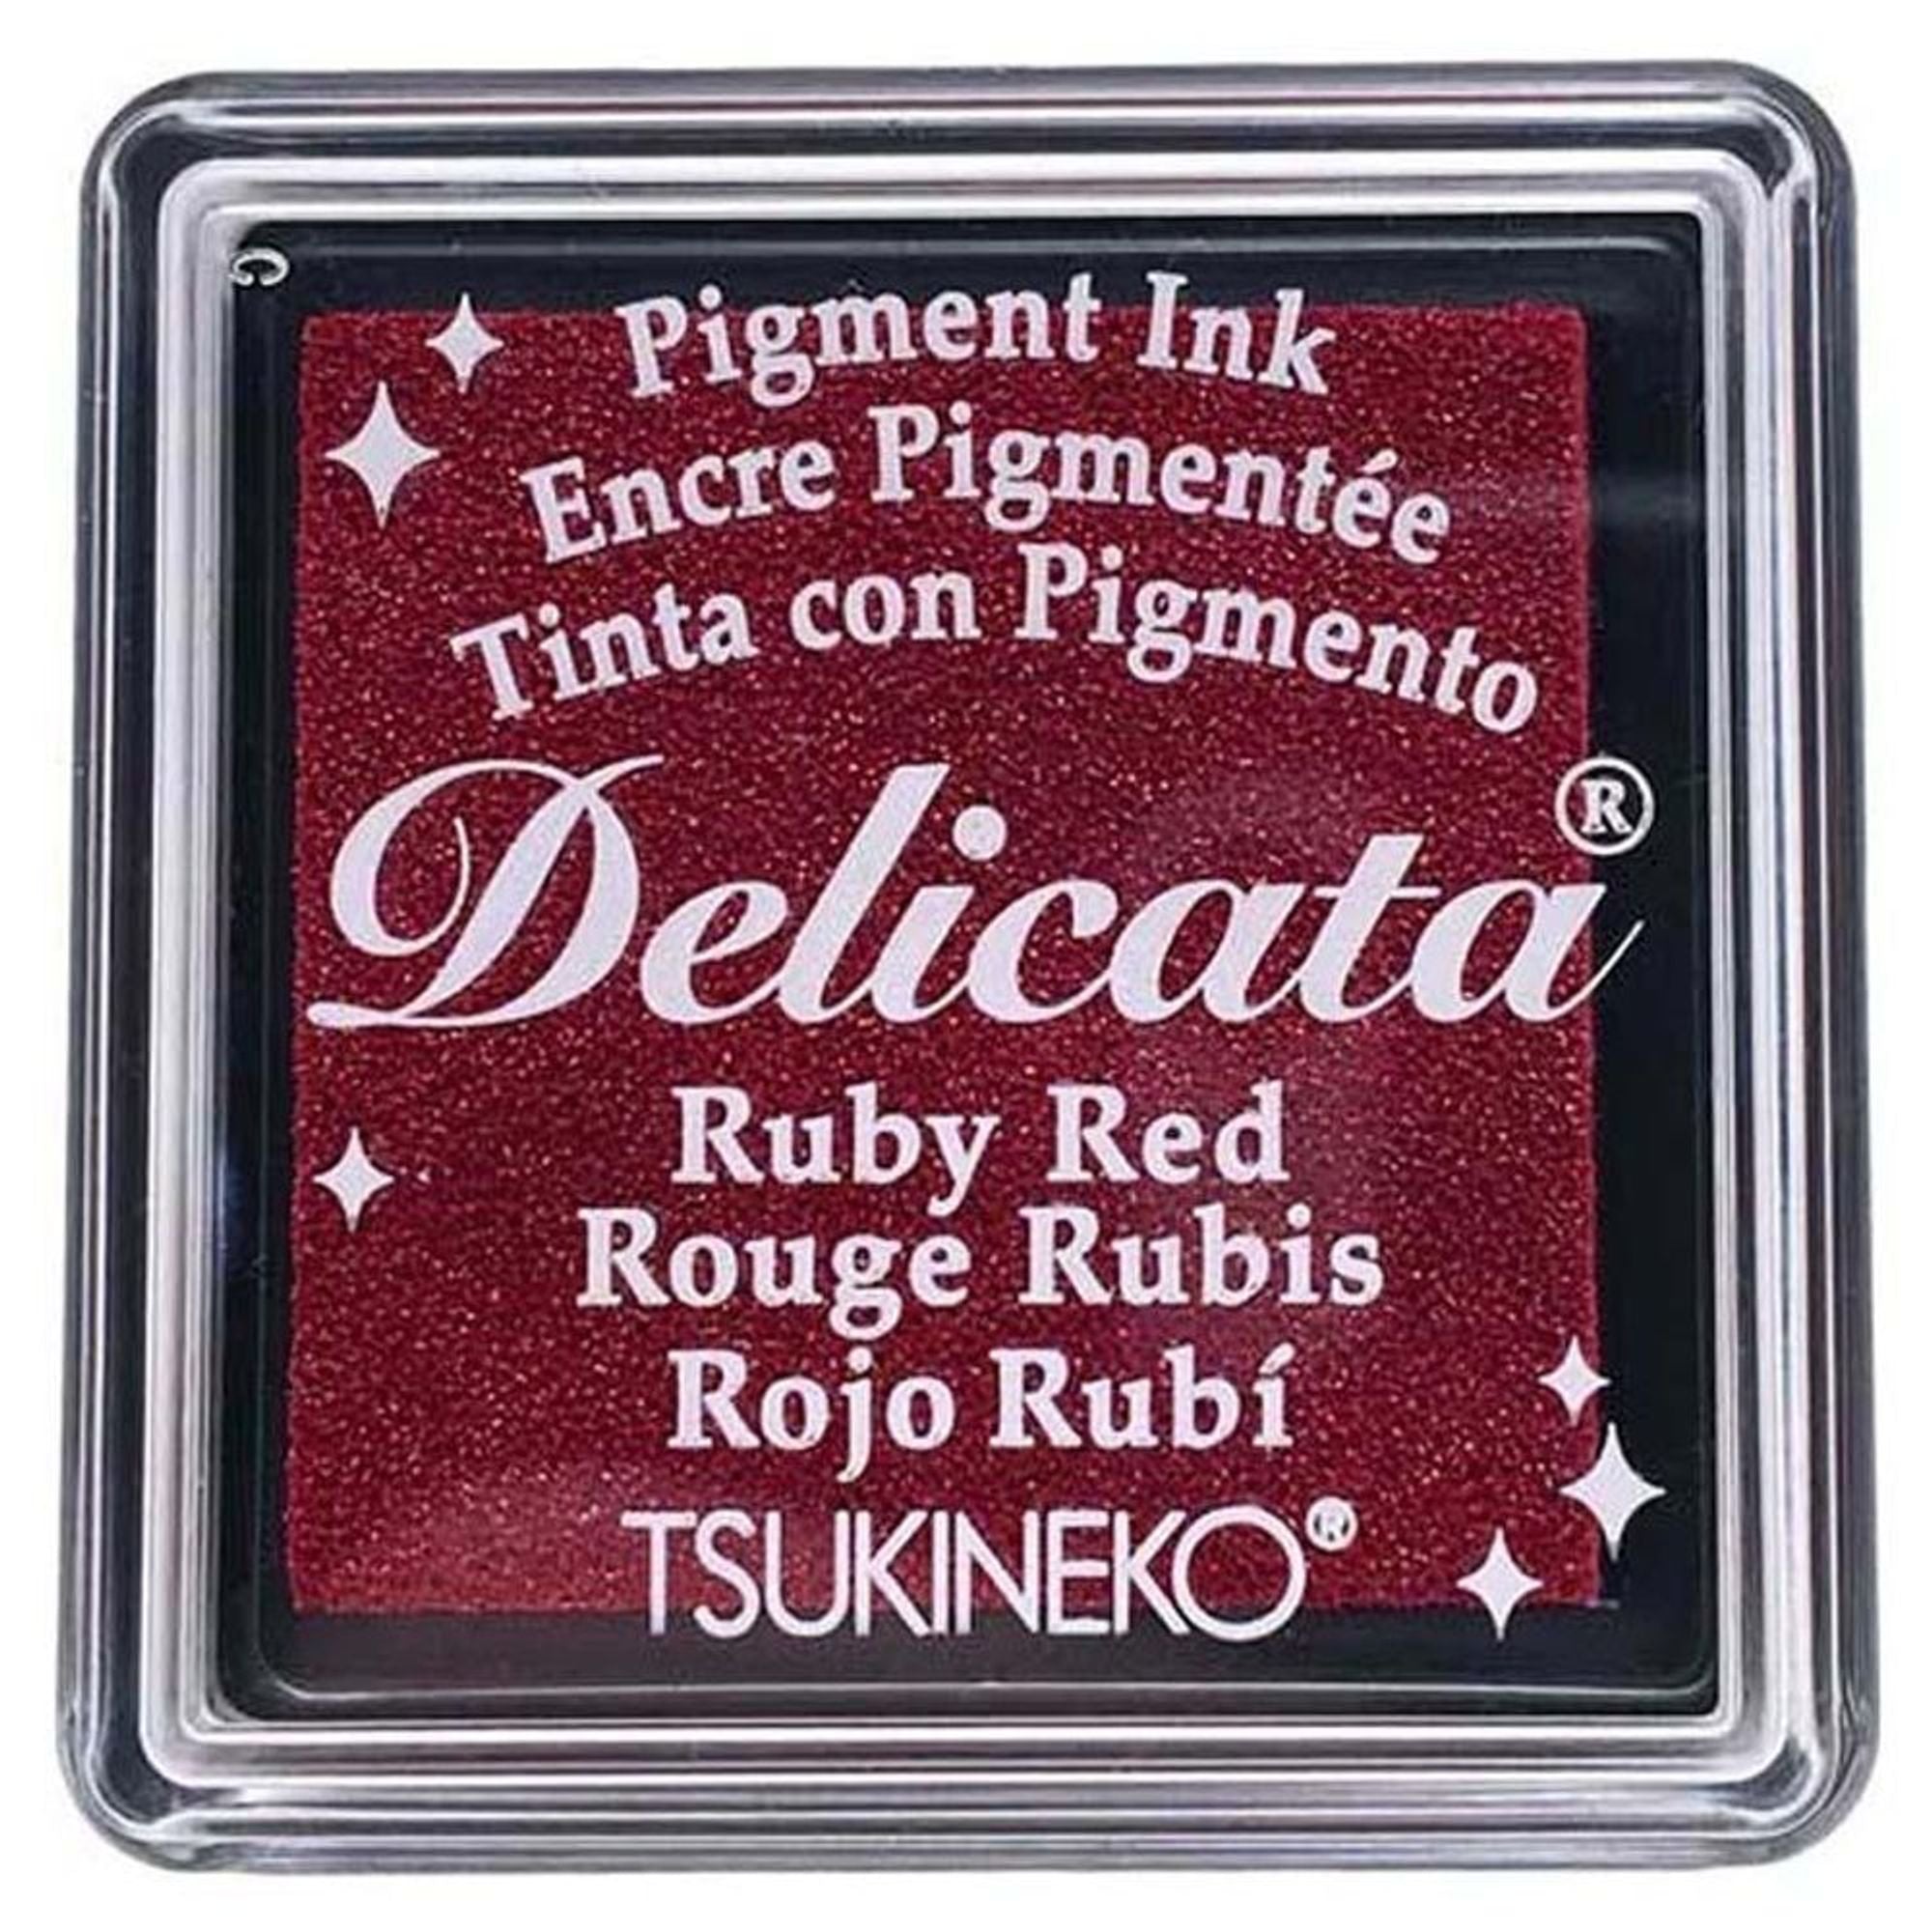 Tsukineko Delicata Pigment Ink Pad